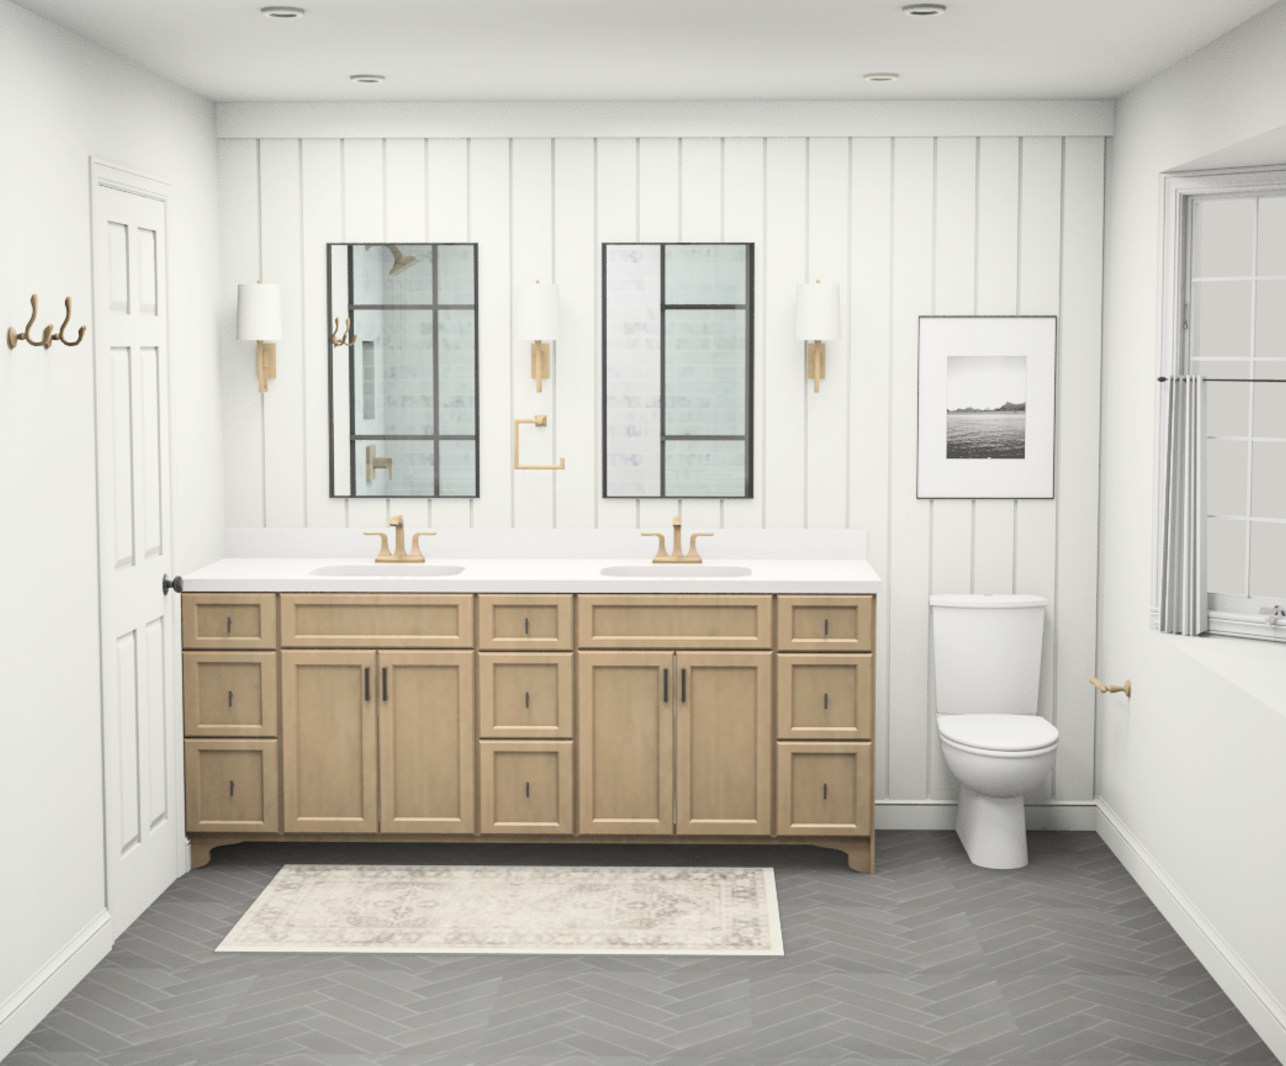 3D rendering of beautiful bathroom design with custom white oak vanity and shiplap wall detail